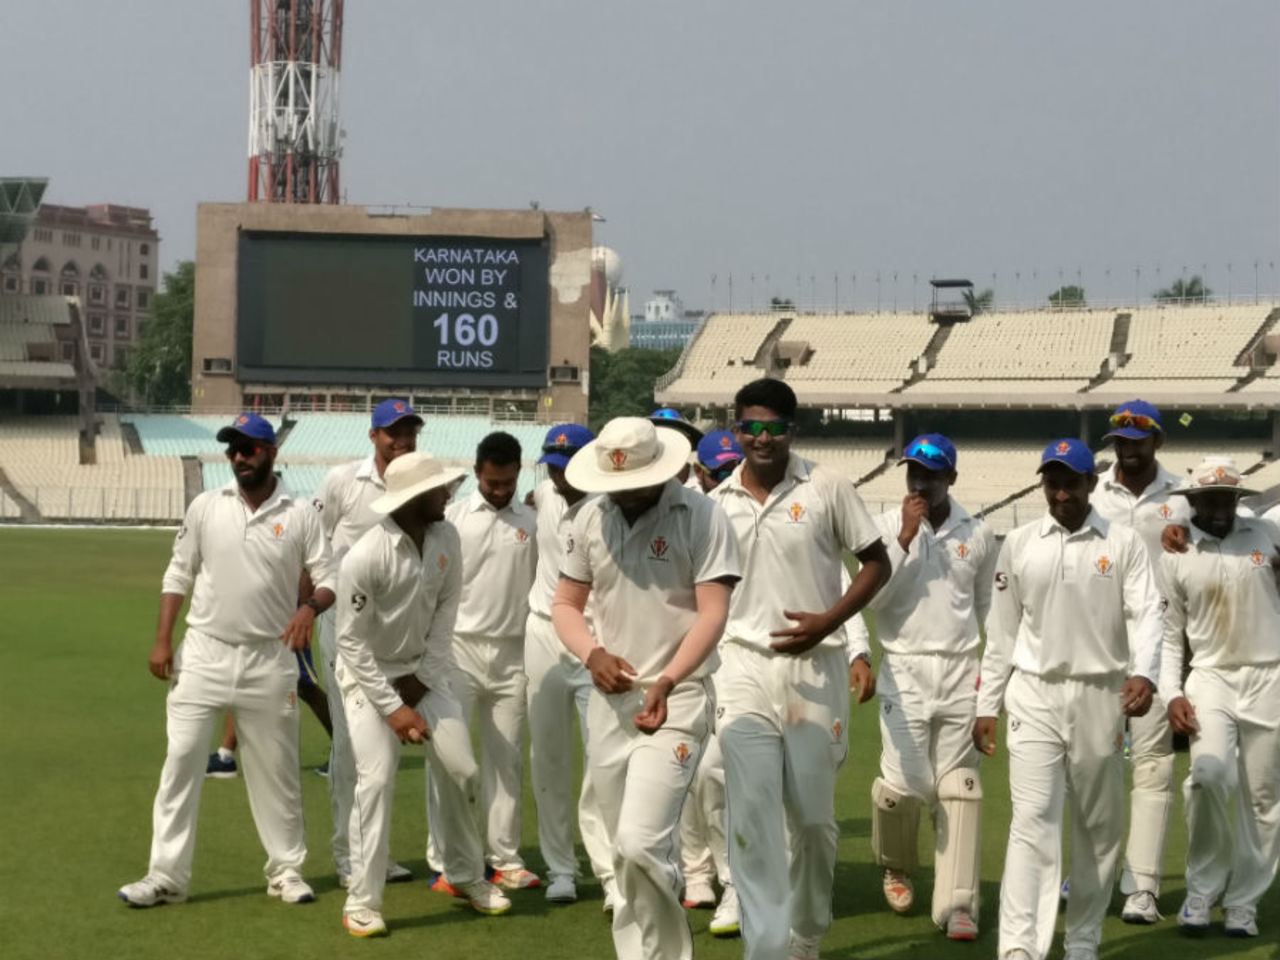 K Gowtham leads Karnataka off the field after their innings and 160-run win over Delhi at Eden Gardens in Kolkata, Karnataka v Delhi, Ranji Trophy 2016-17, Group B, 3rd day, October 22, 2016